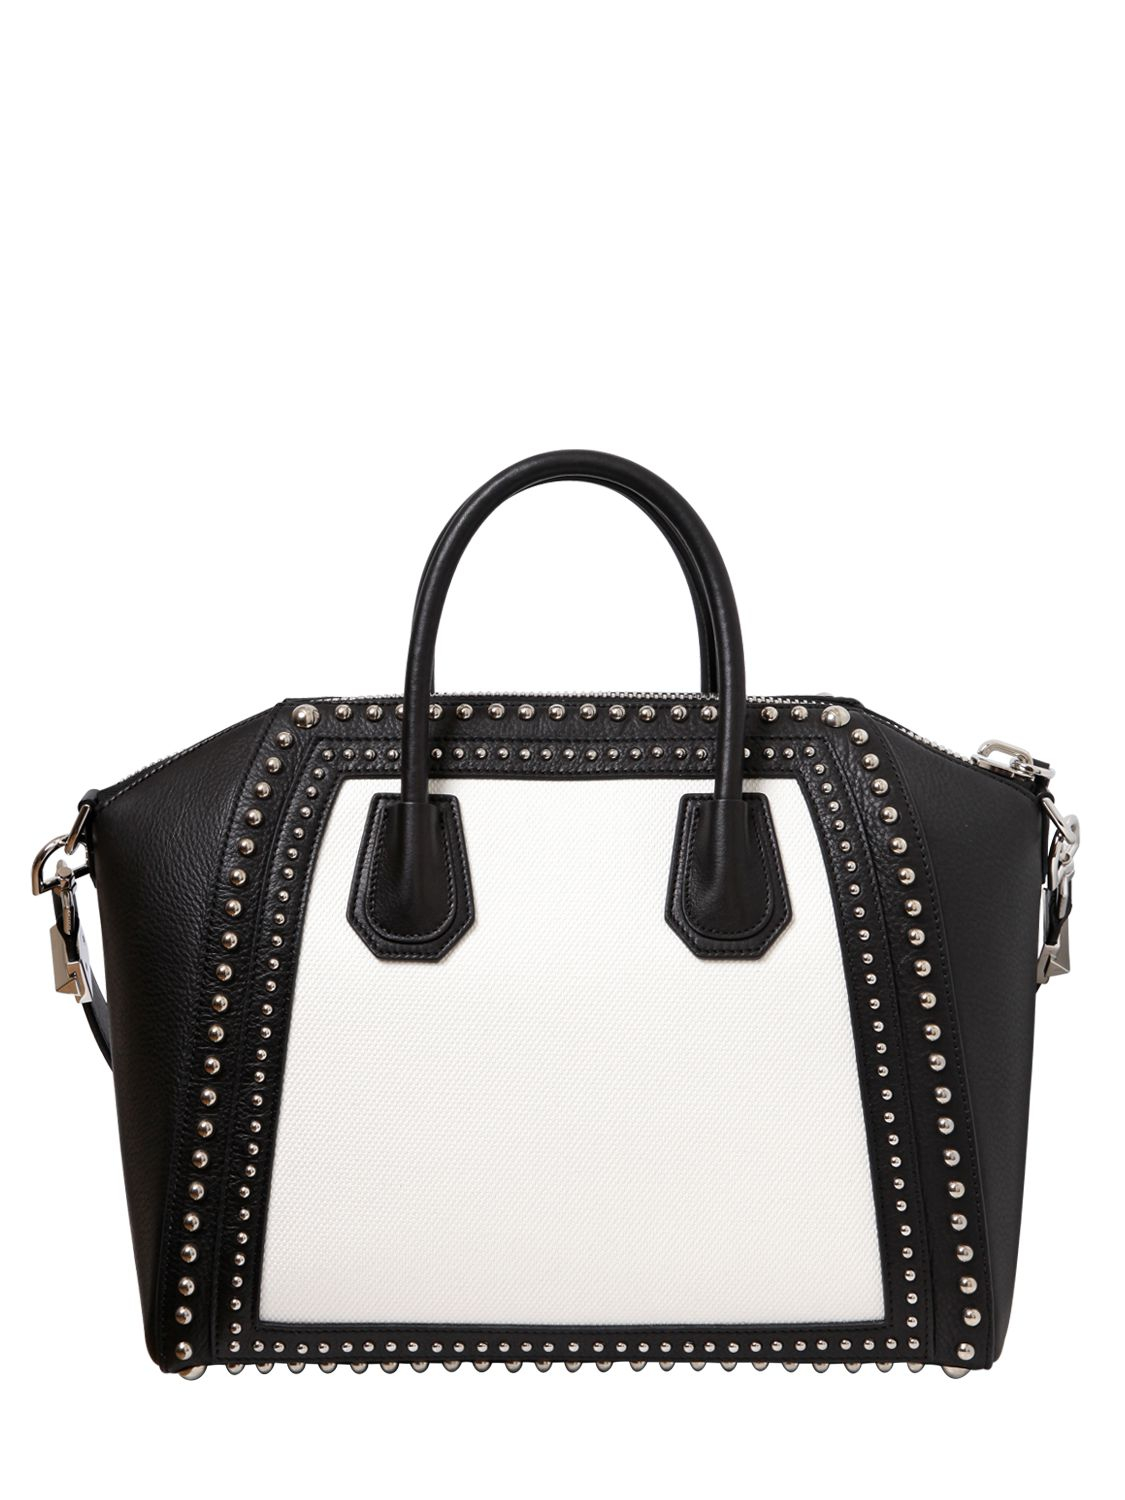 Givenchy Medium Antigona Studded Leather Bag in Black/White (White) - Lyst